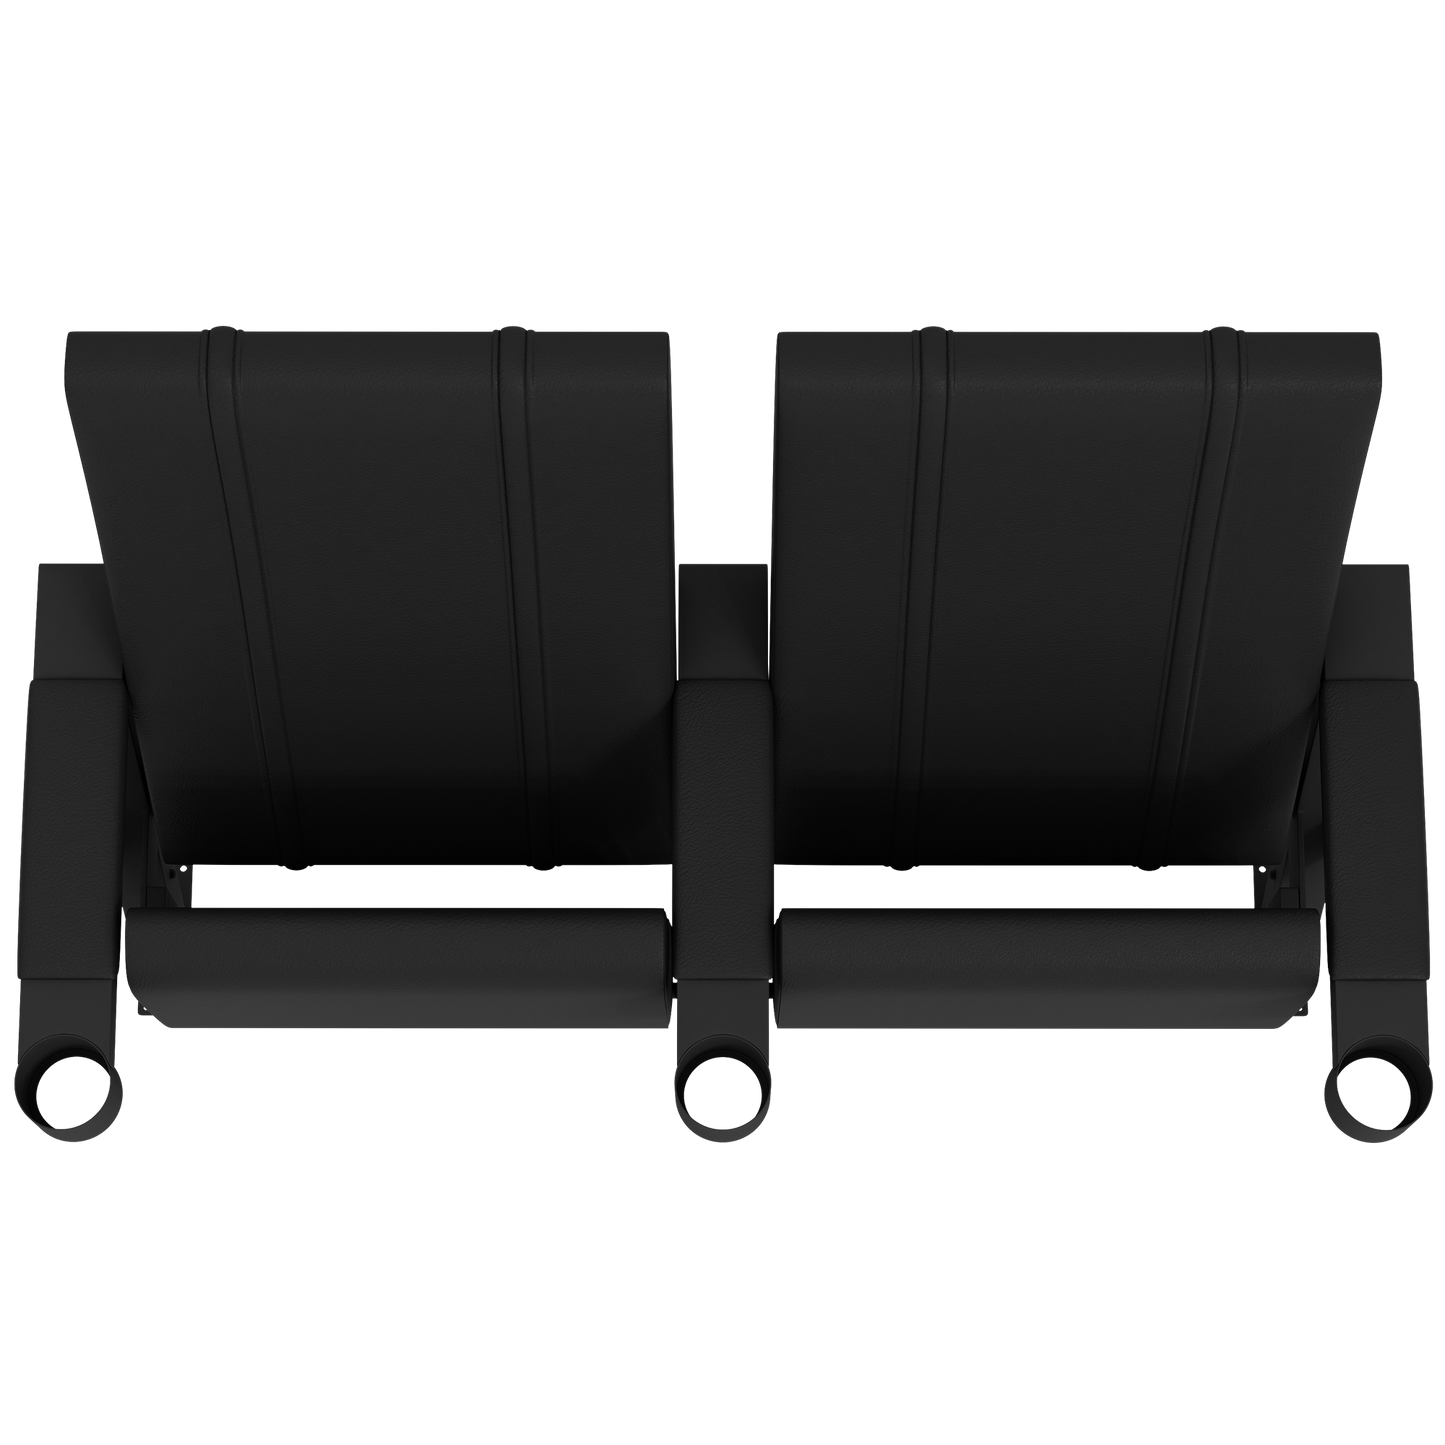 SuiteMax 3.5 VIP Seats with Detroit Lions Classic Logo